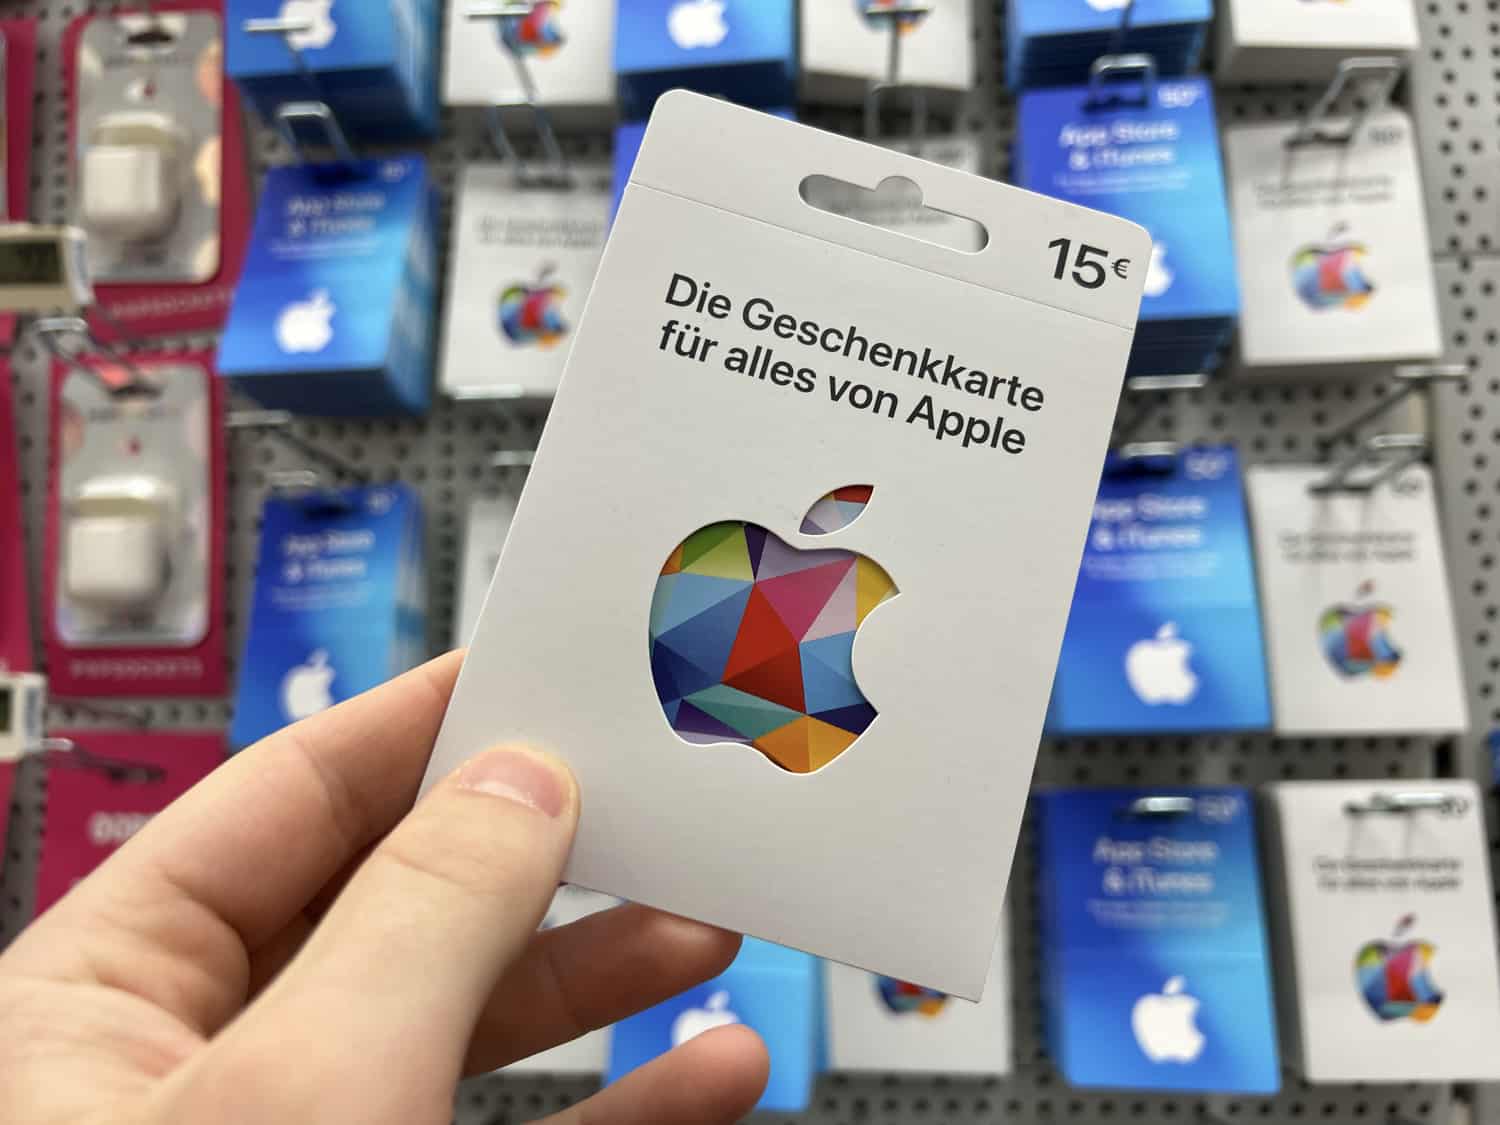 Penny] 20-fach Payback Punkte auf Apple Gift Cards Guthaben